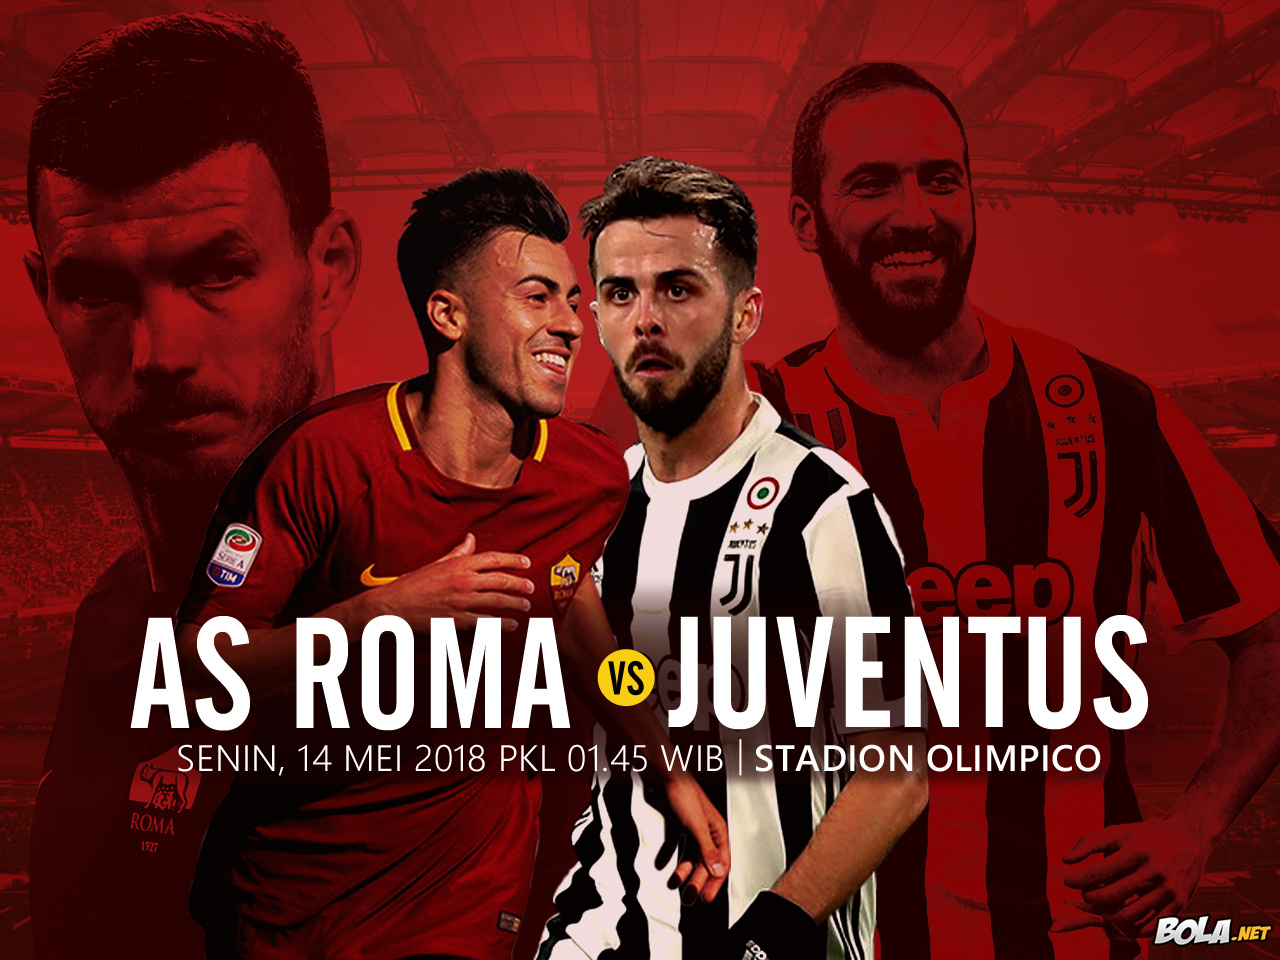 Deskripsi : Wallpaper As Roma Vs Juventus, size: 1280x960